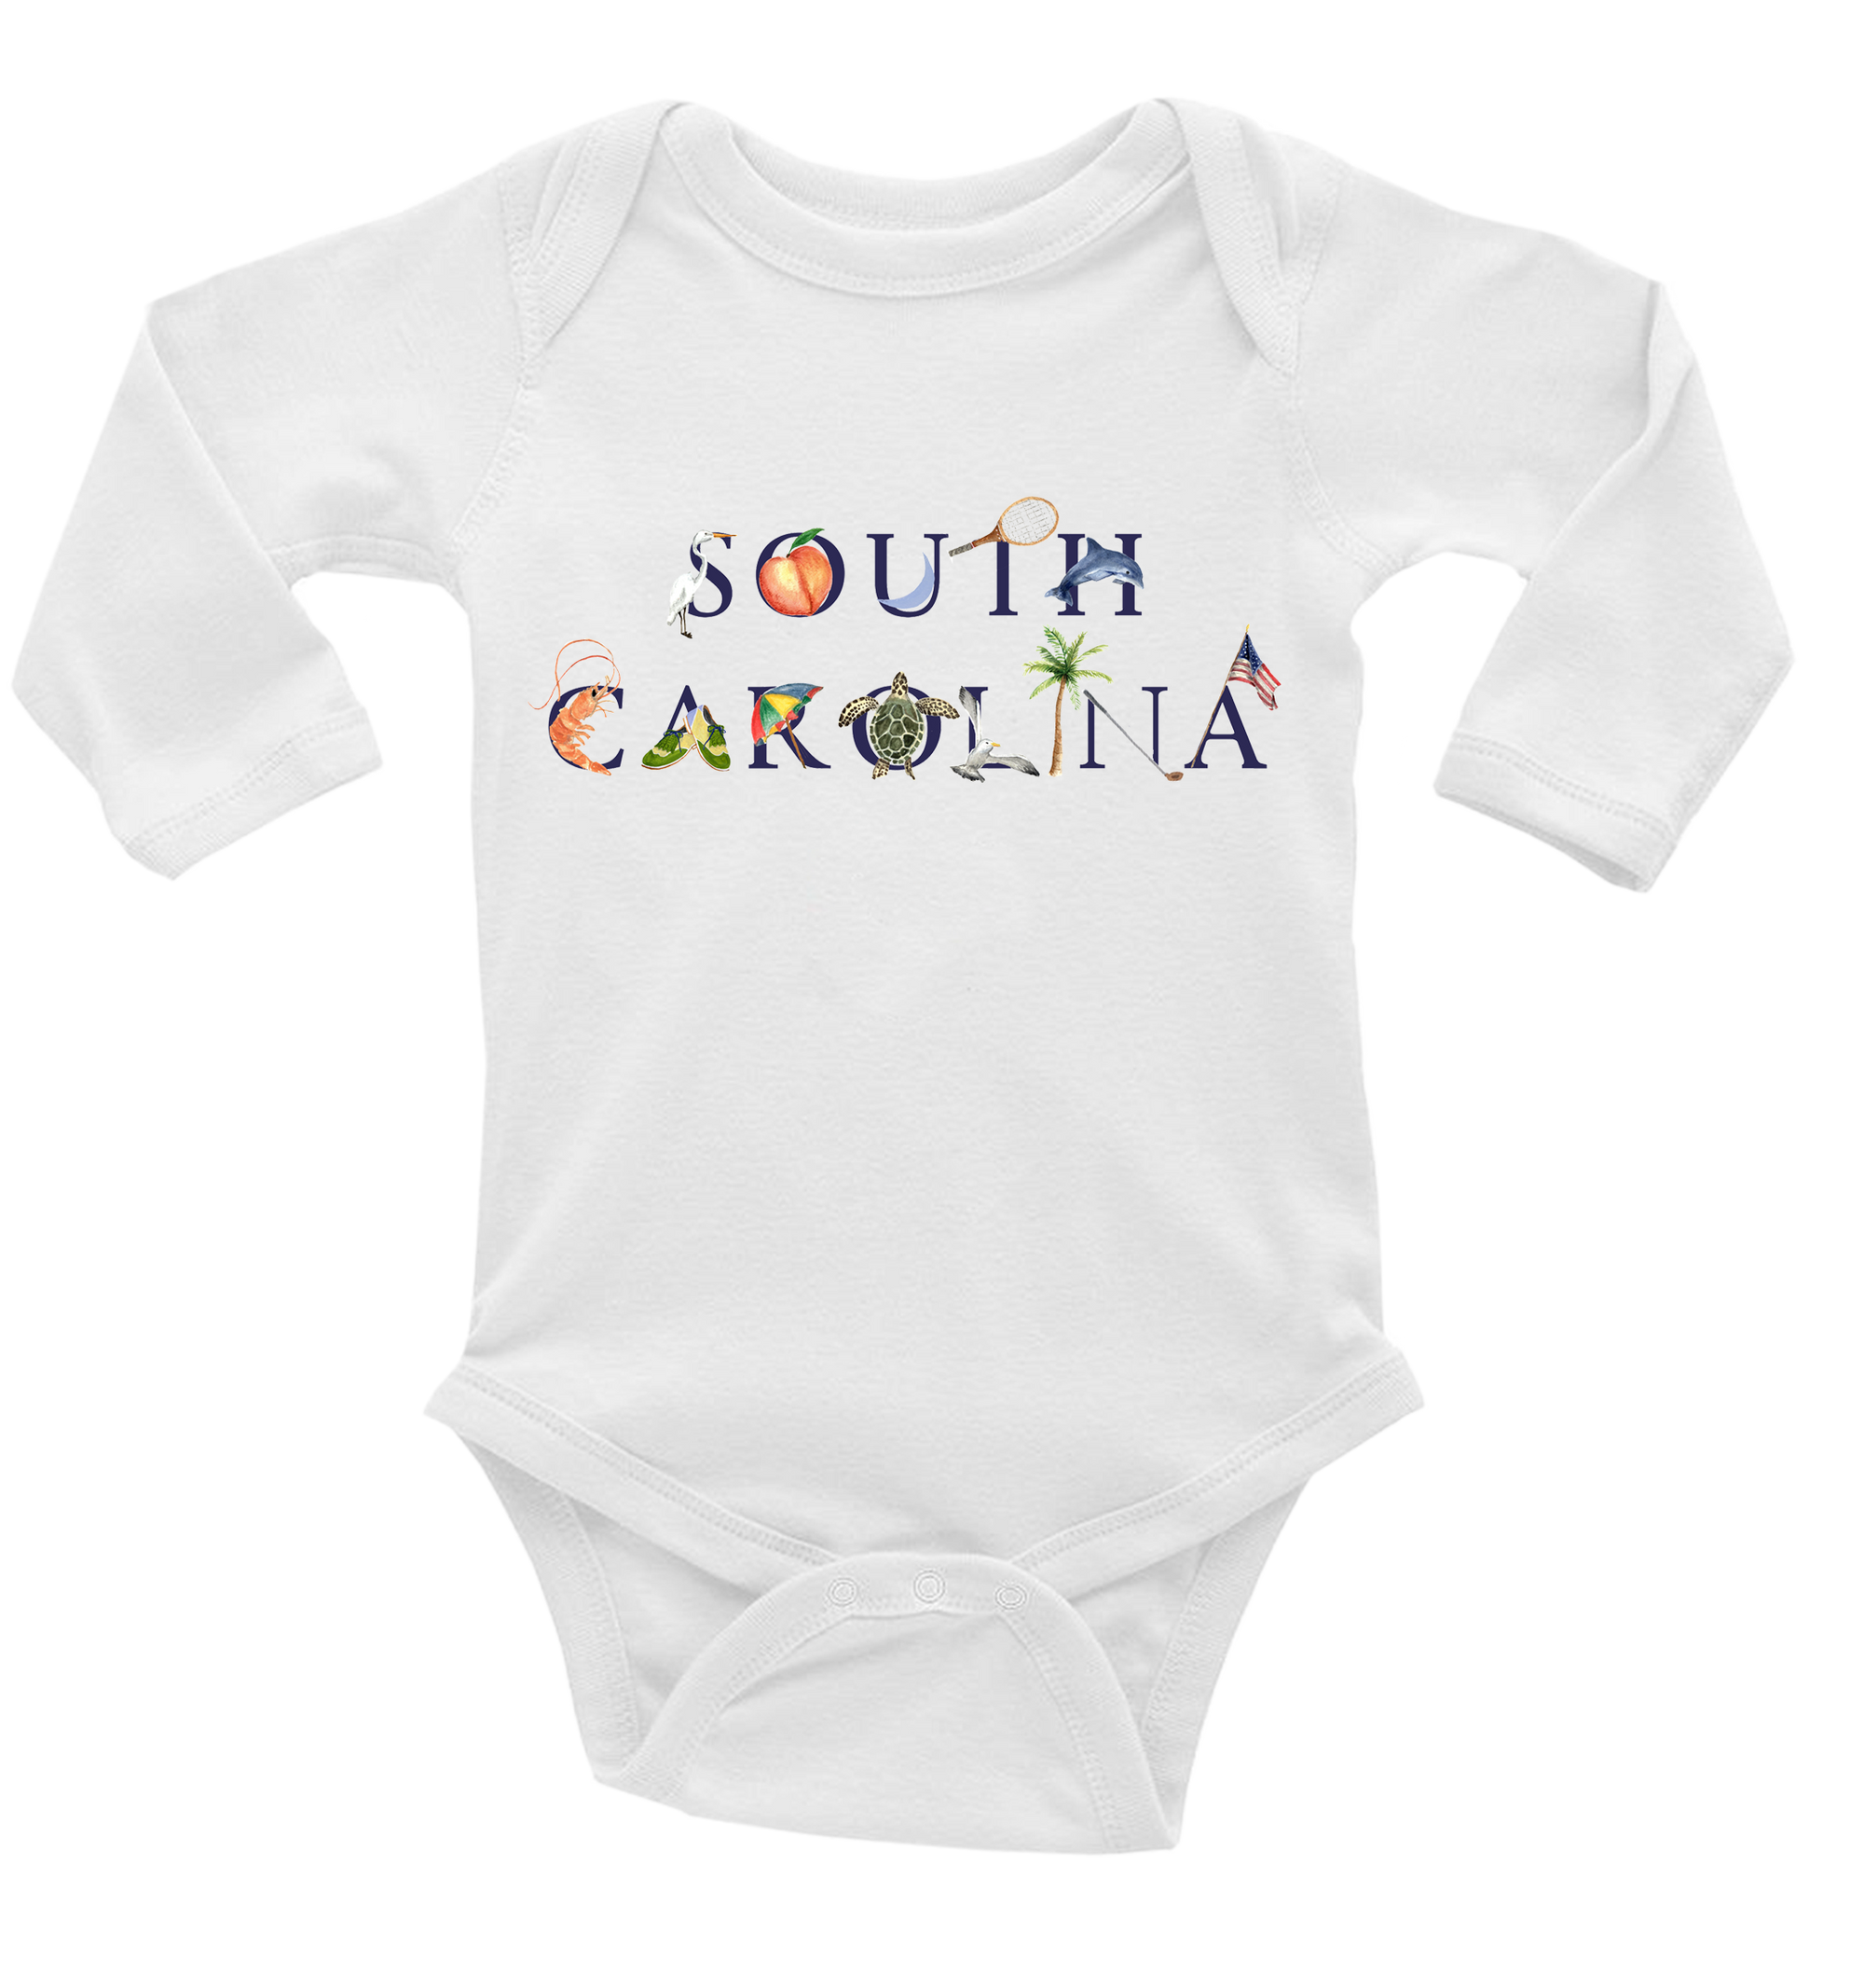 South Carolina baby snap up long sleeve